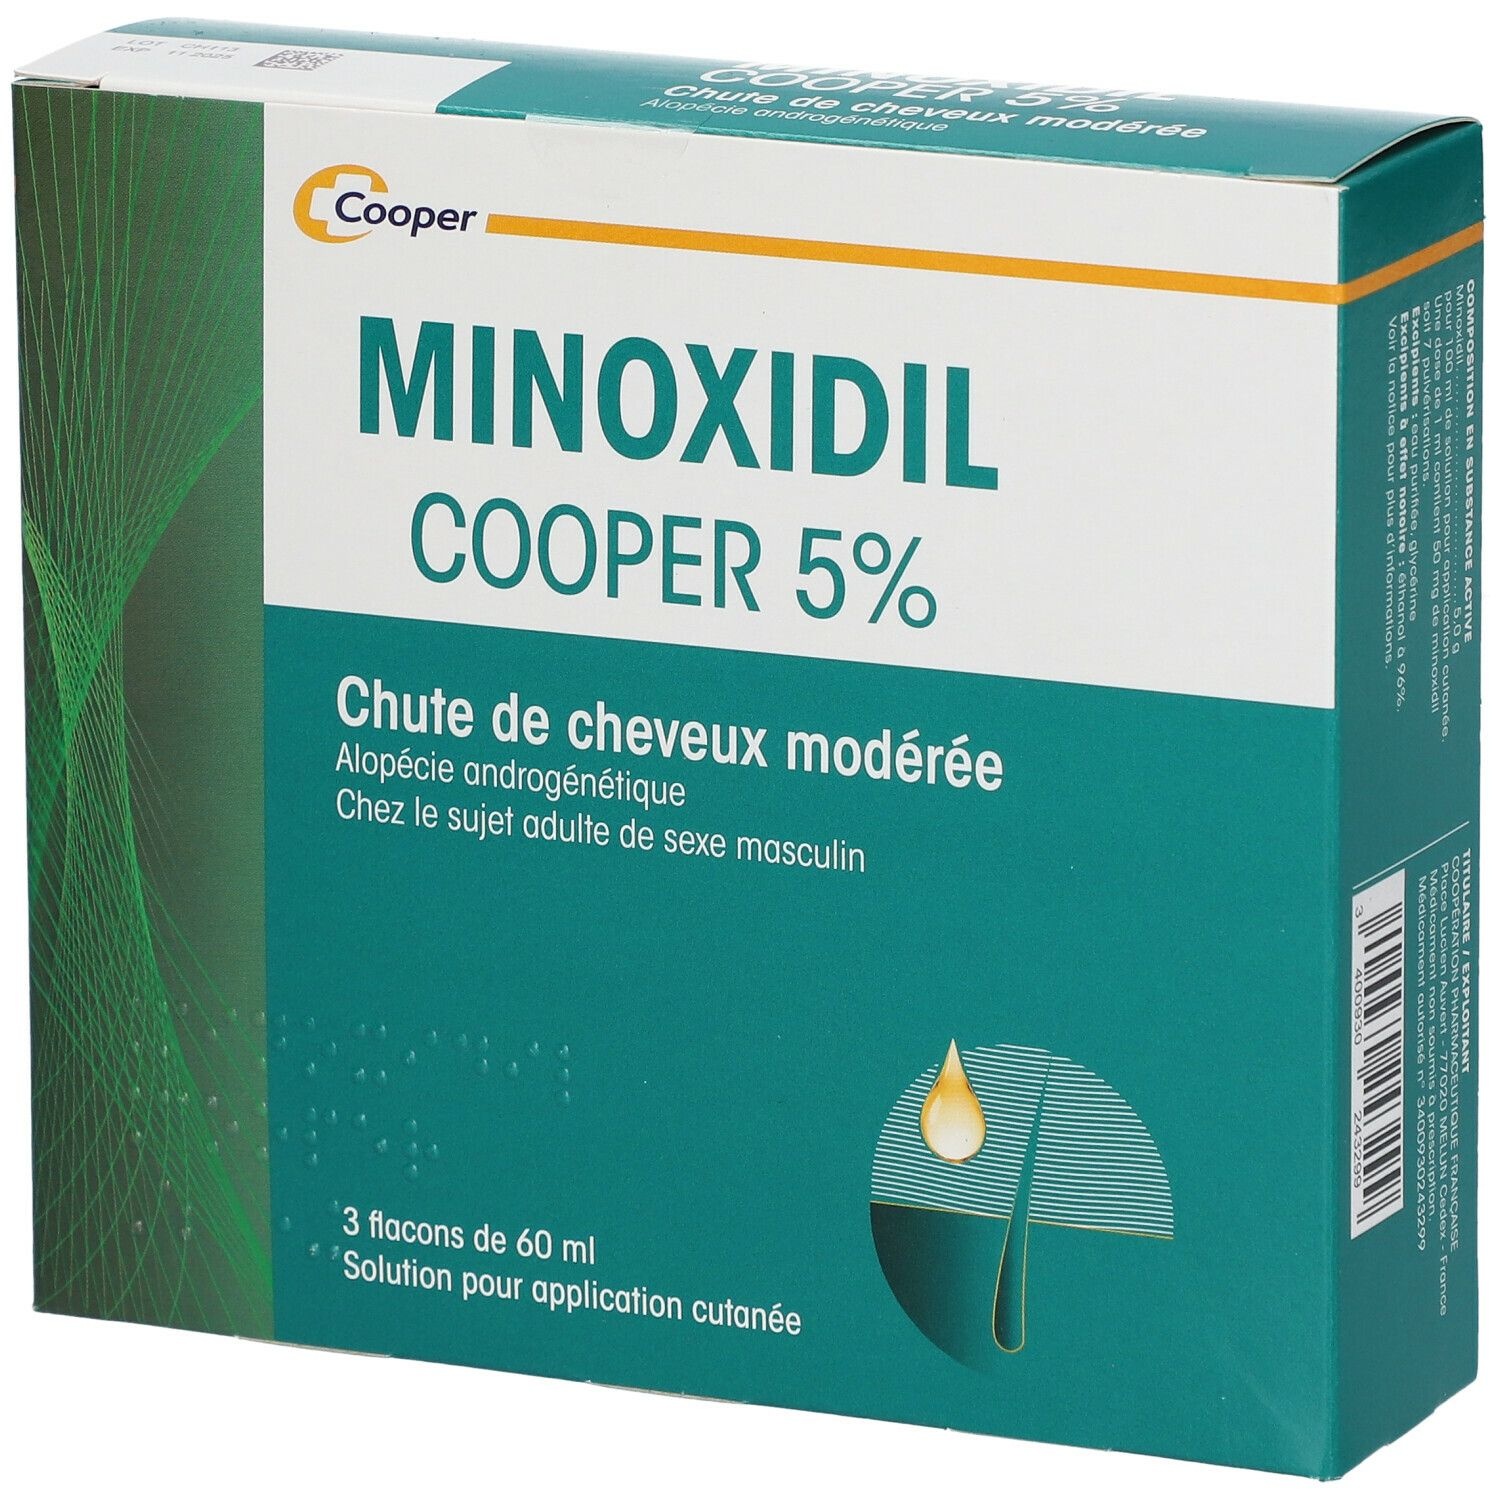 MINOXIDIL COOPER 5 % 180 ml solution(s)